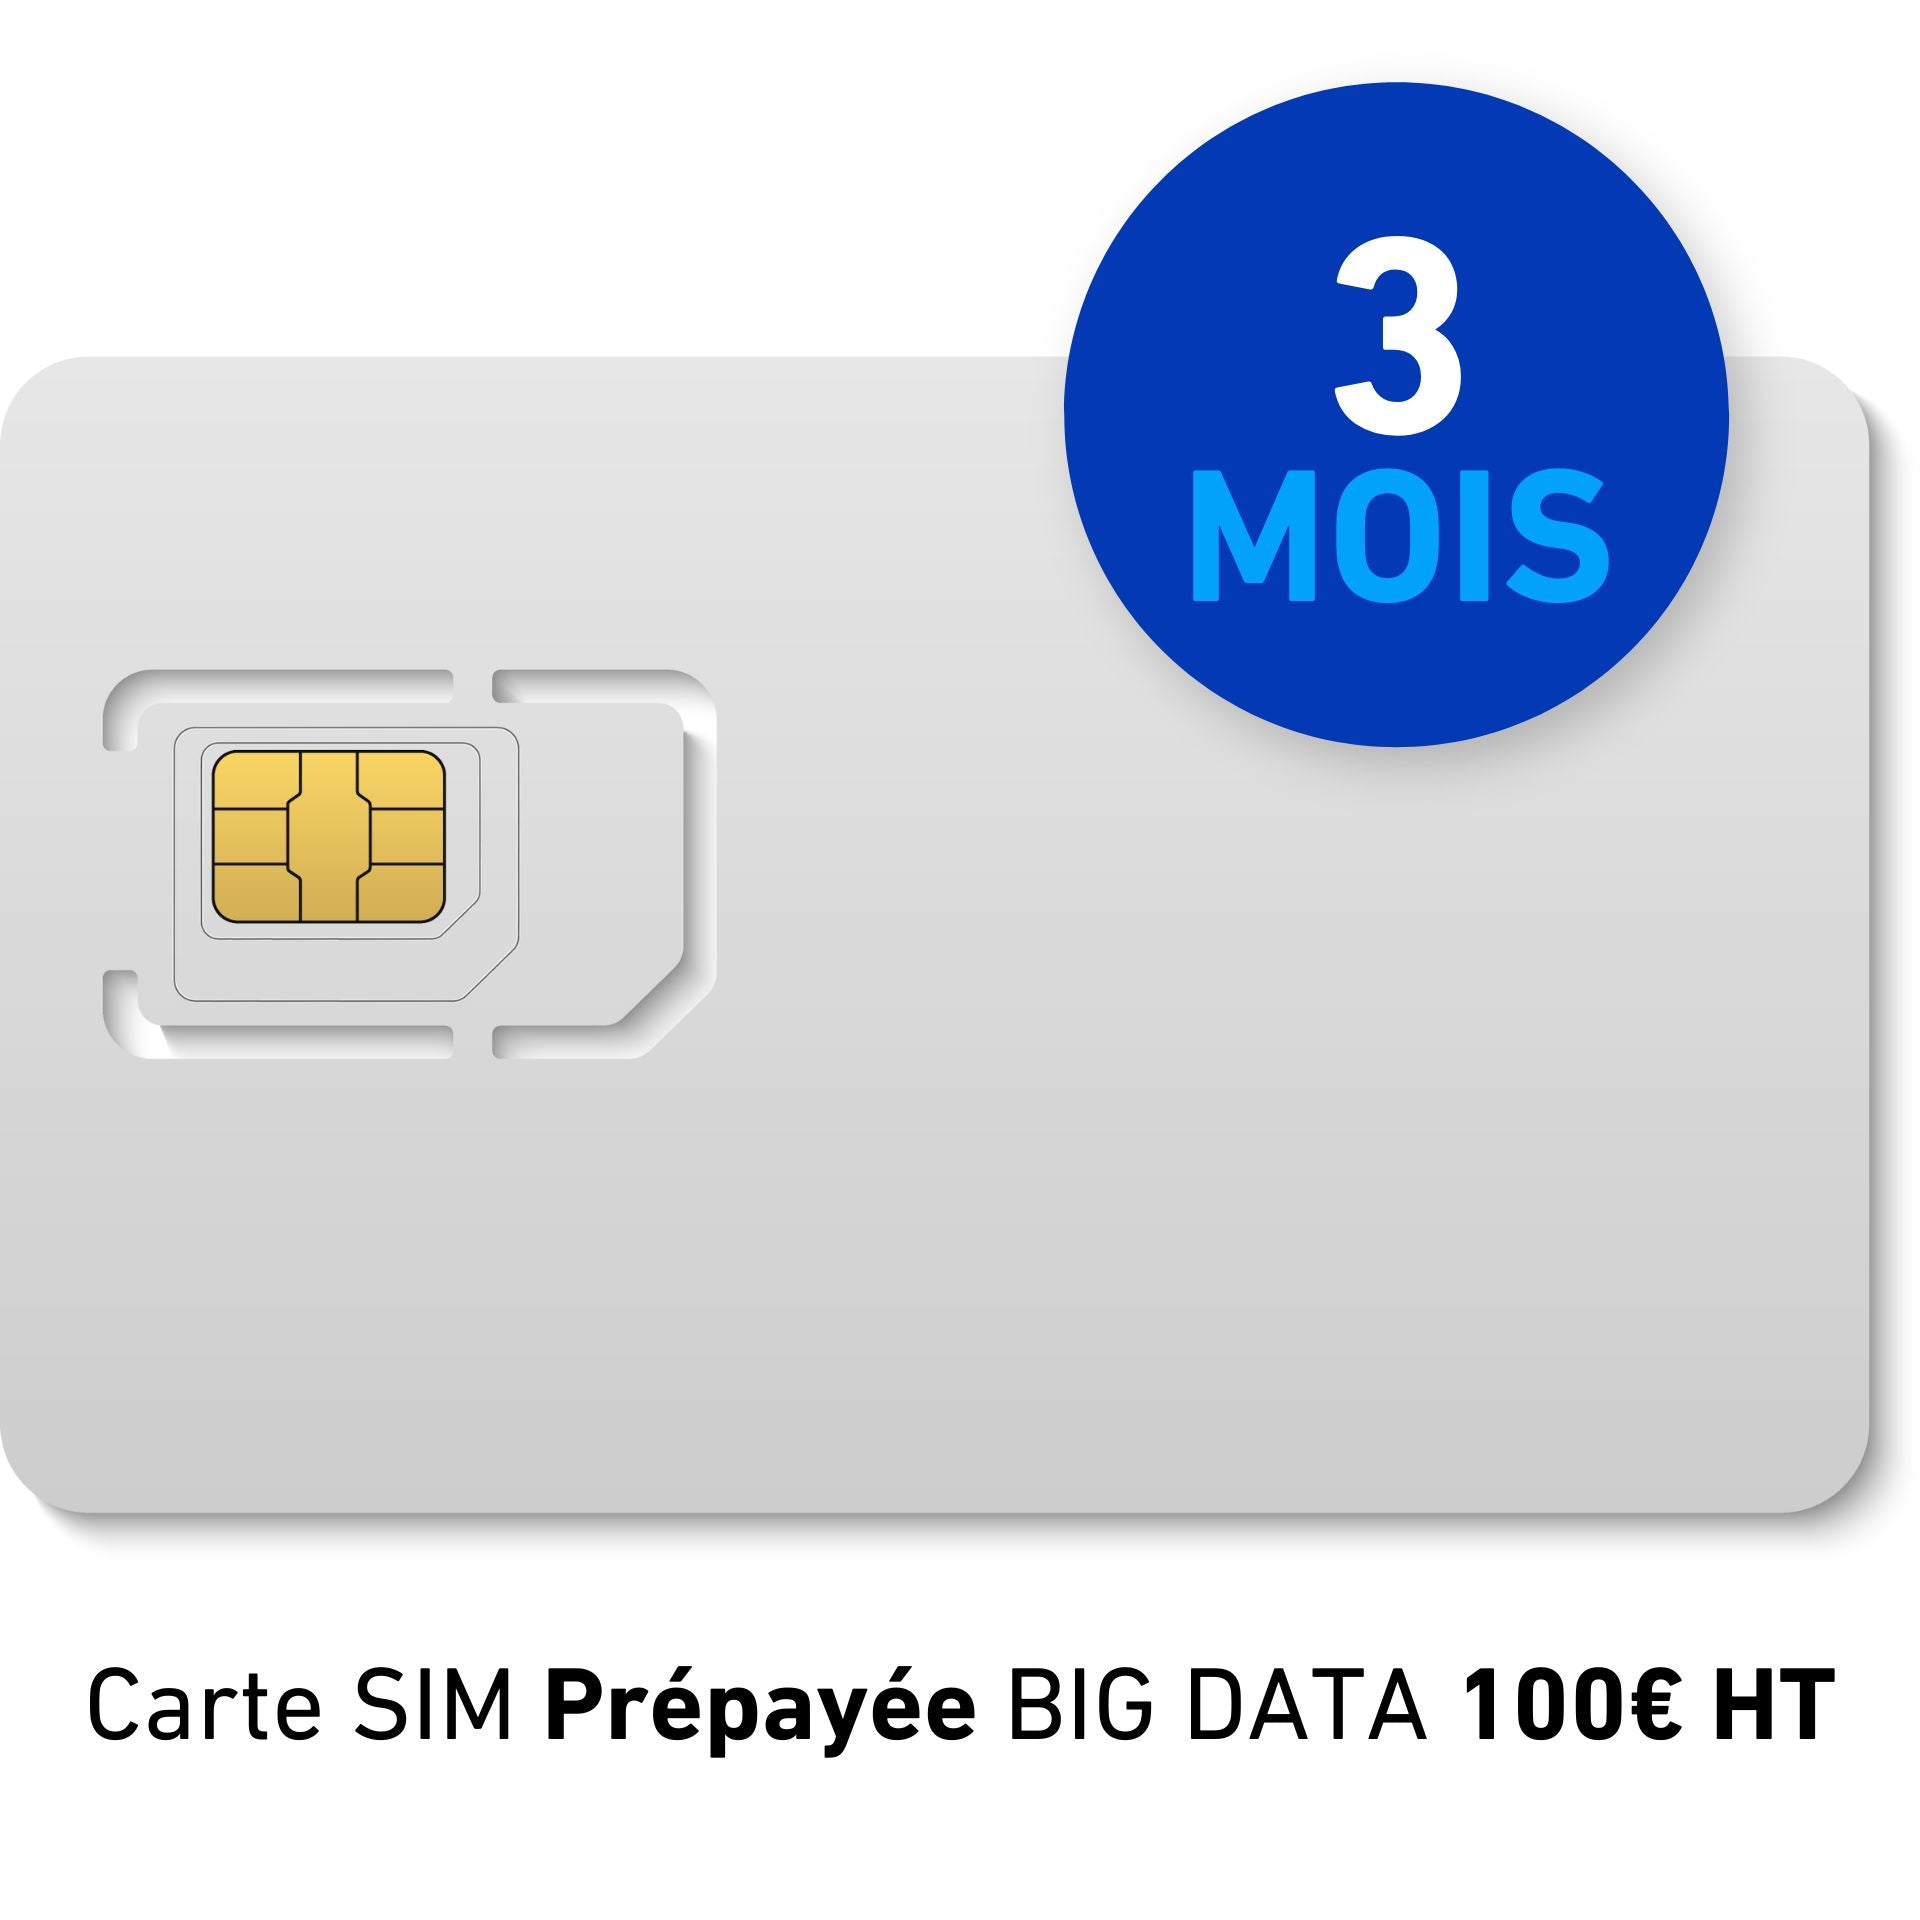 Prepaid-SIM-Karte BIG DATA 100 € zzgl. MwSt. - GÜLTIGKEIT 3 MONATE